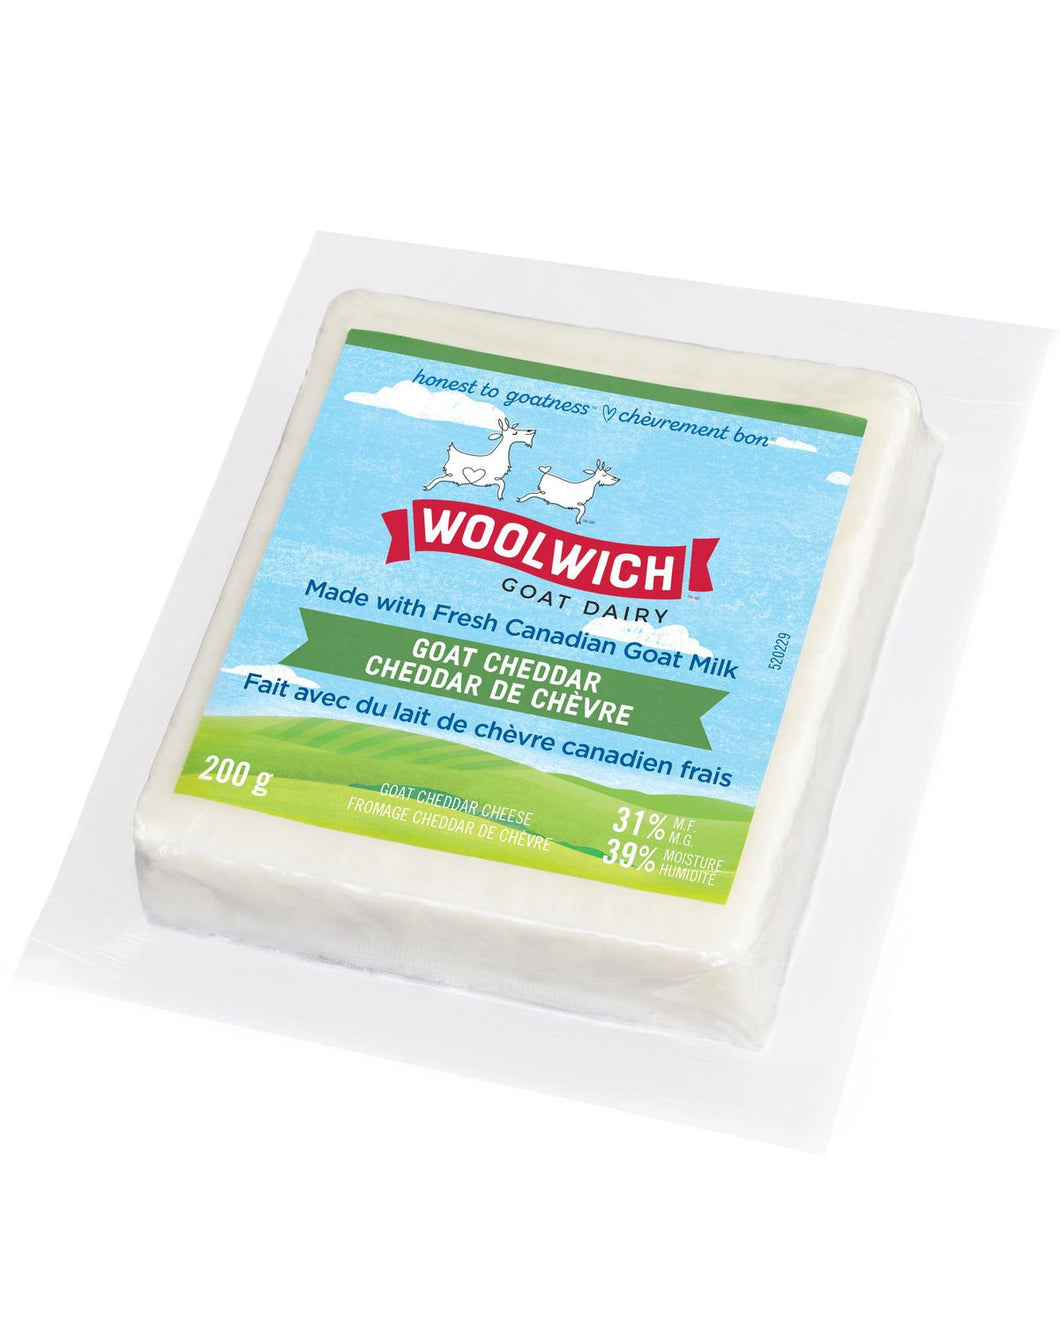 Woolwich Goat Cheddar Cheese (200g)